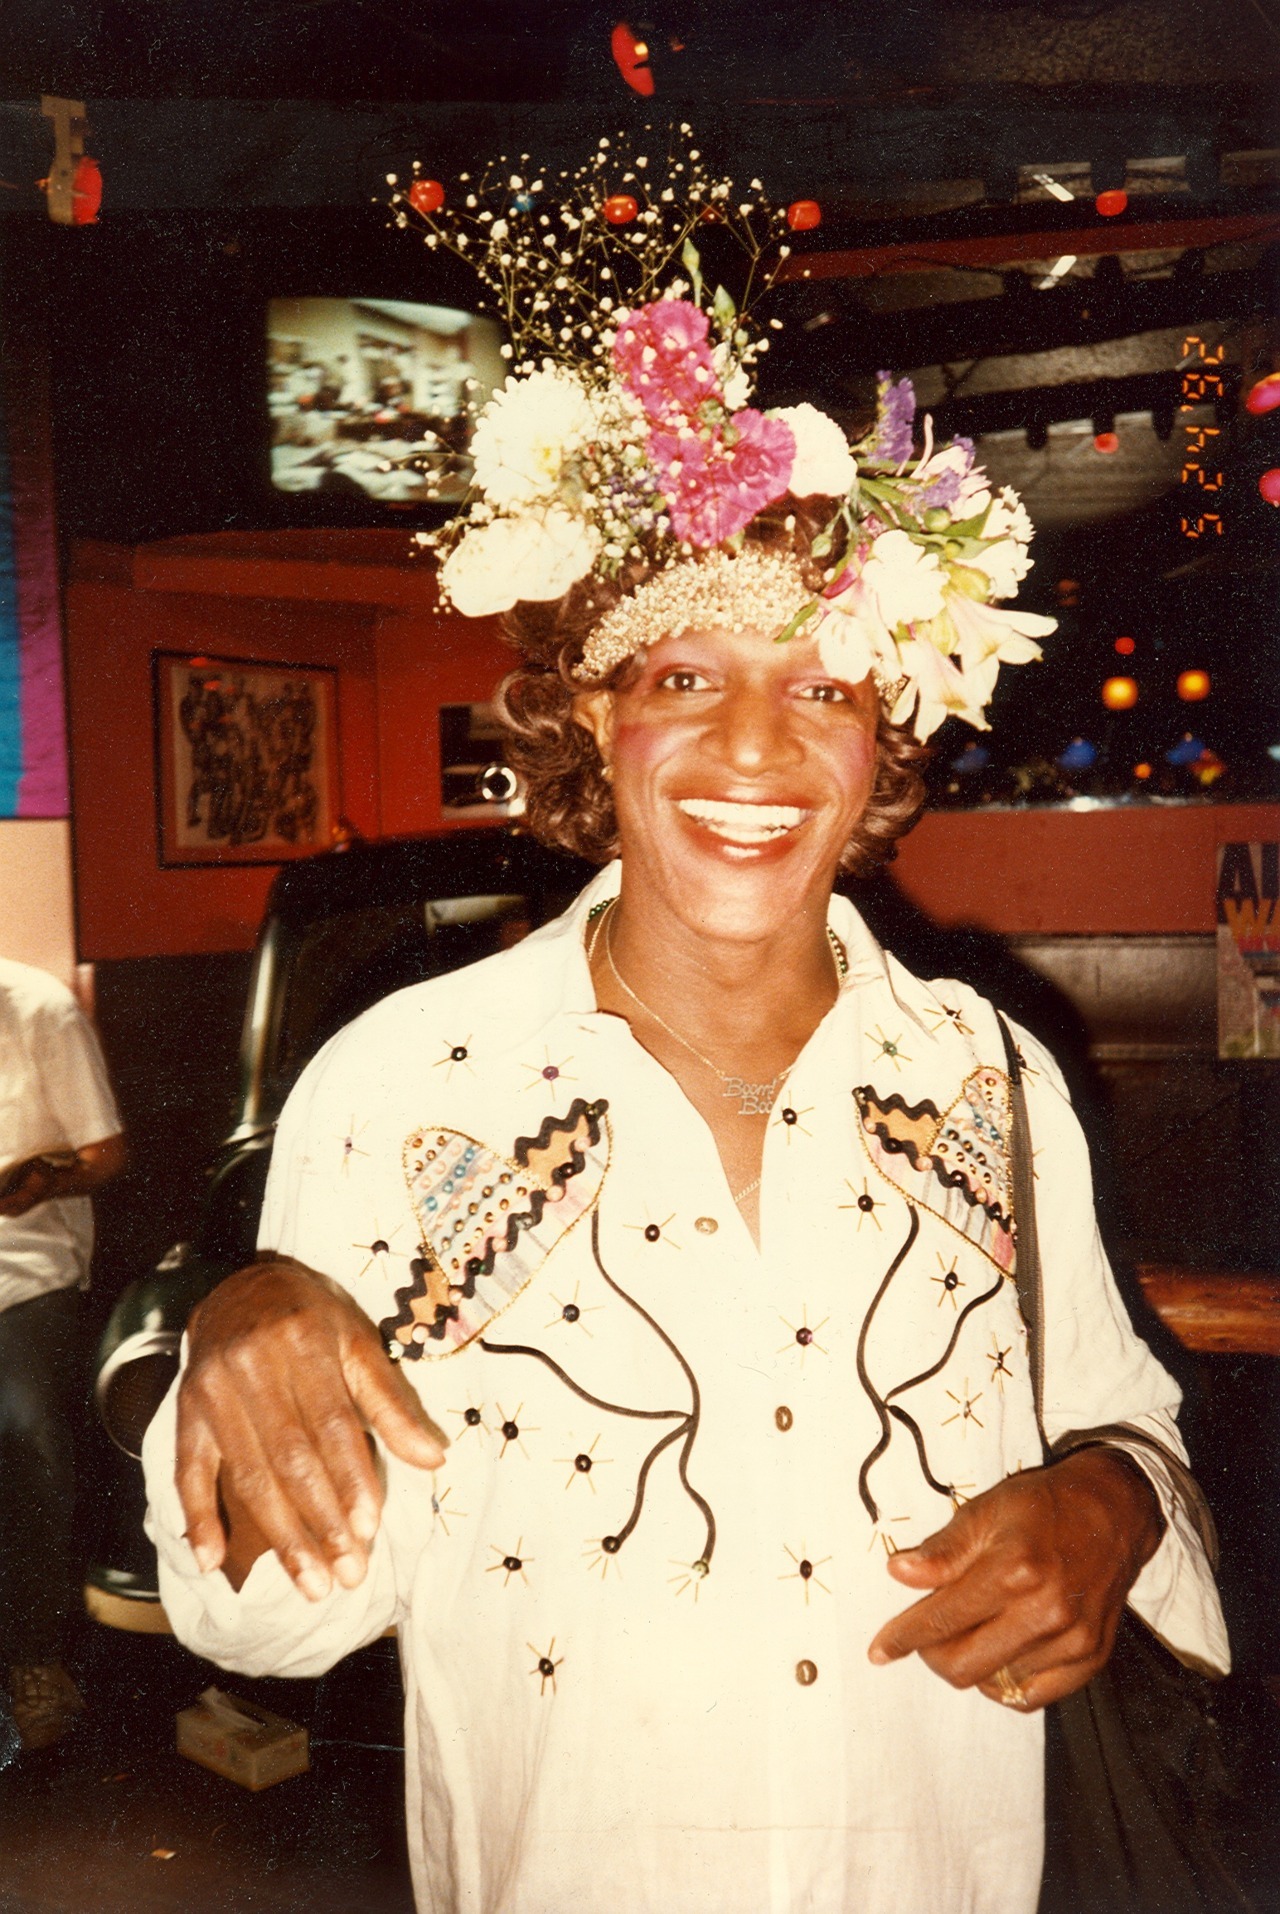 beyond-the-label:  #Blackout Trans Pioneer: Marsha P. JohnsonAn influential transgender